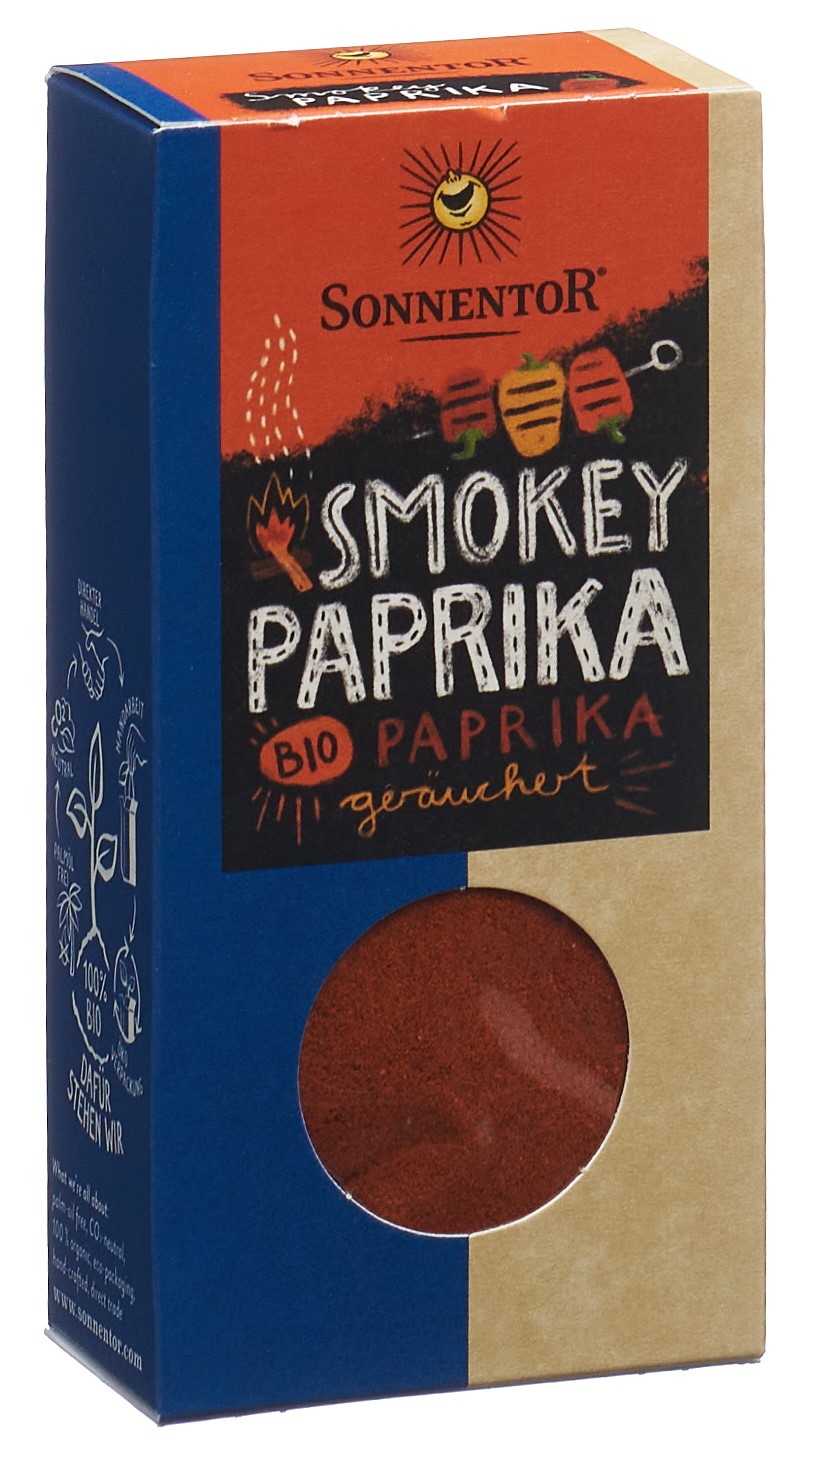 Smokey Paprika